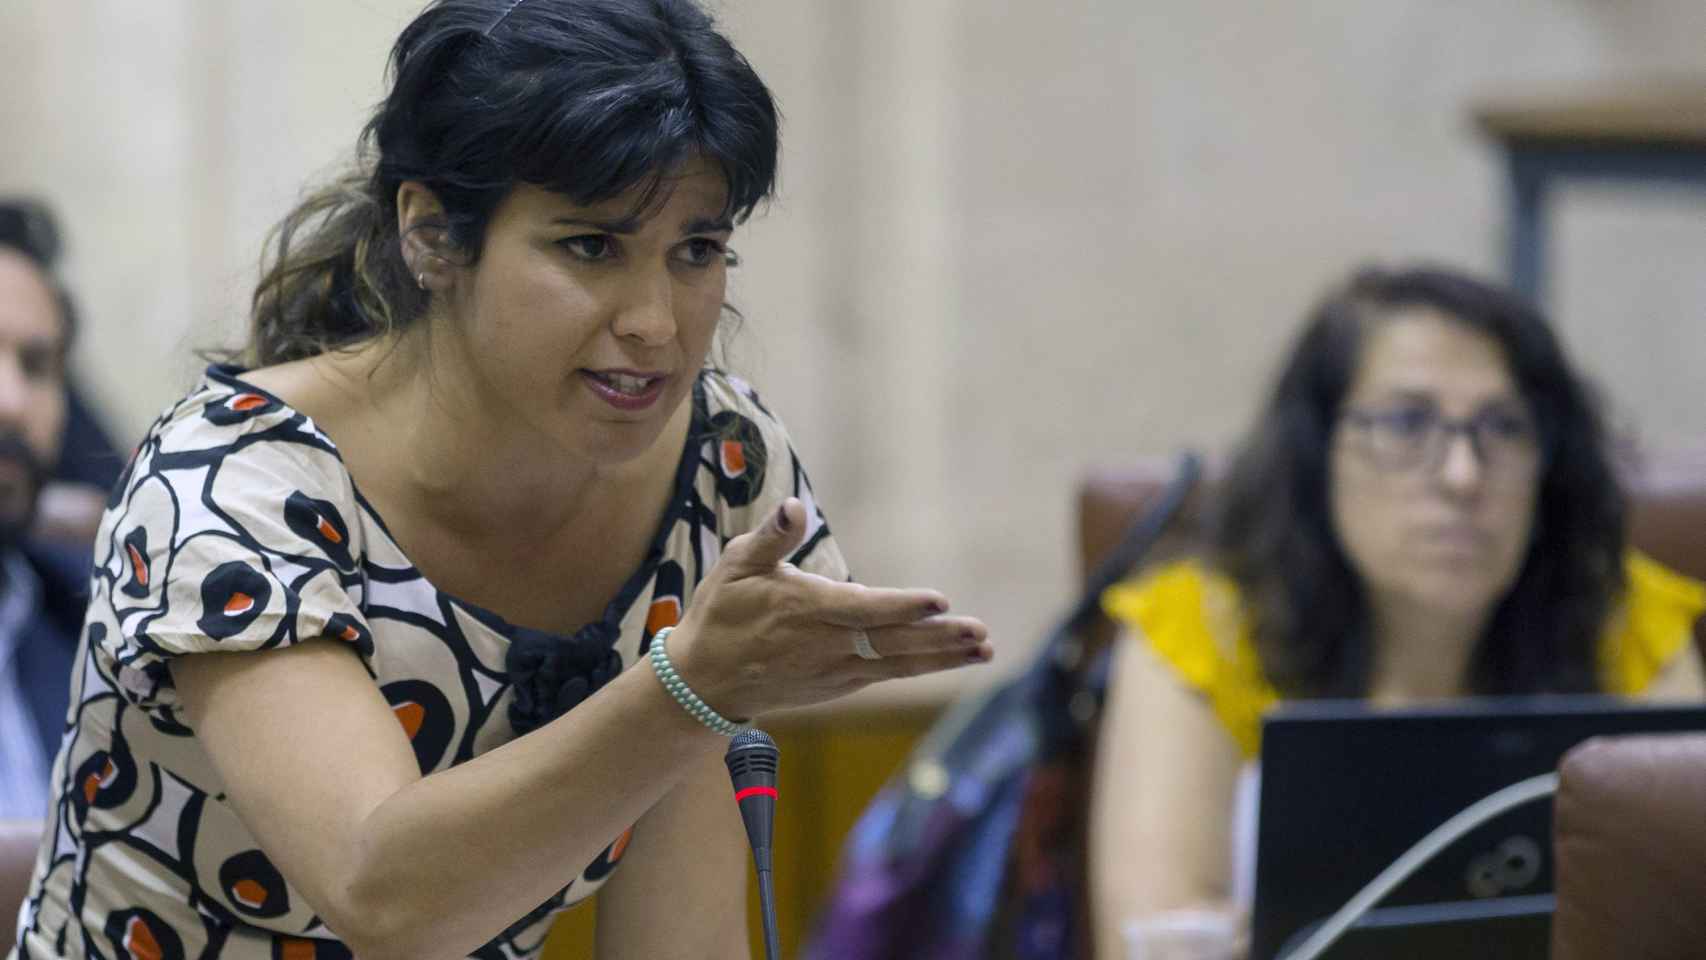 Teresa Rodríguez en un imagen en el Parlamento andaluz